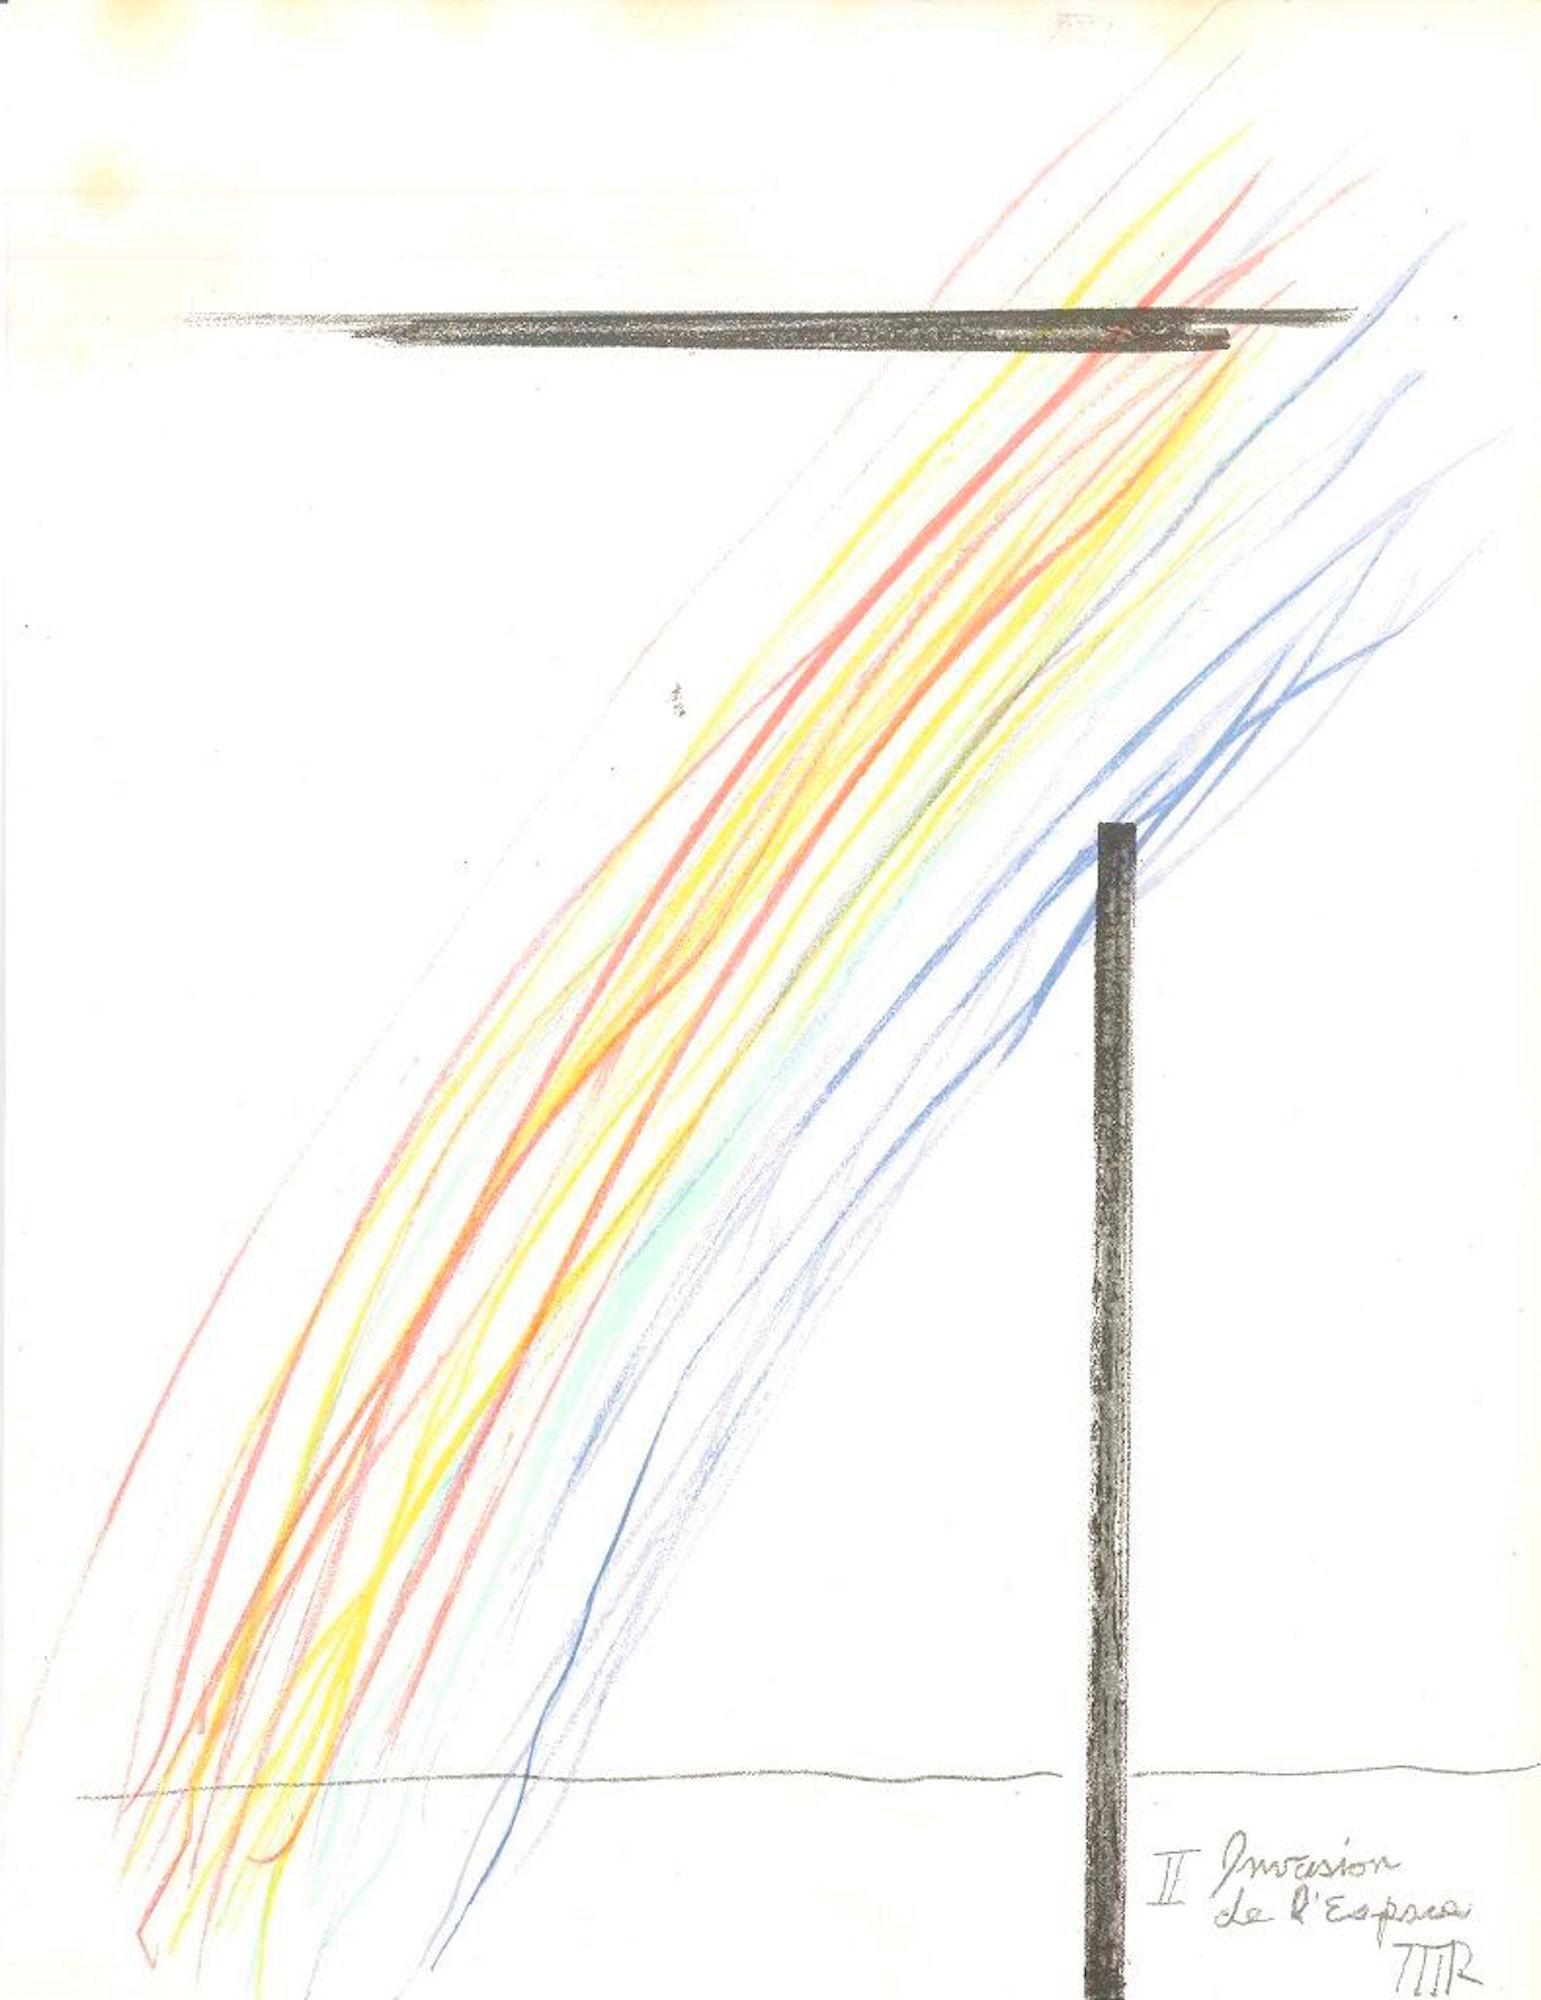 Invasion de l'espace - Original Lithograph by Man Ray - 1975